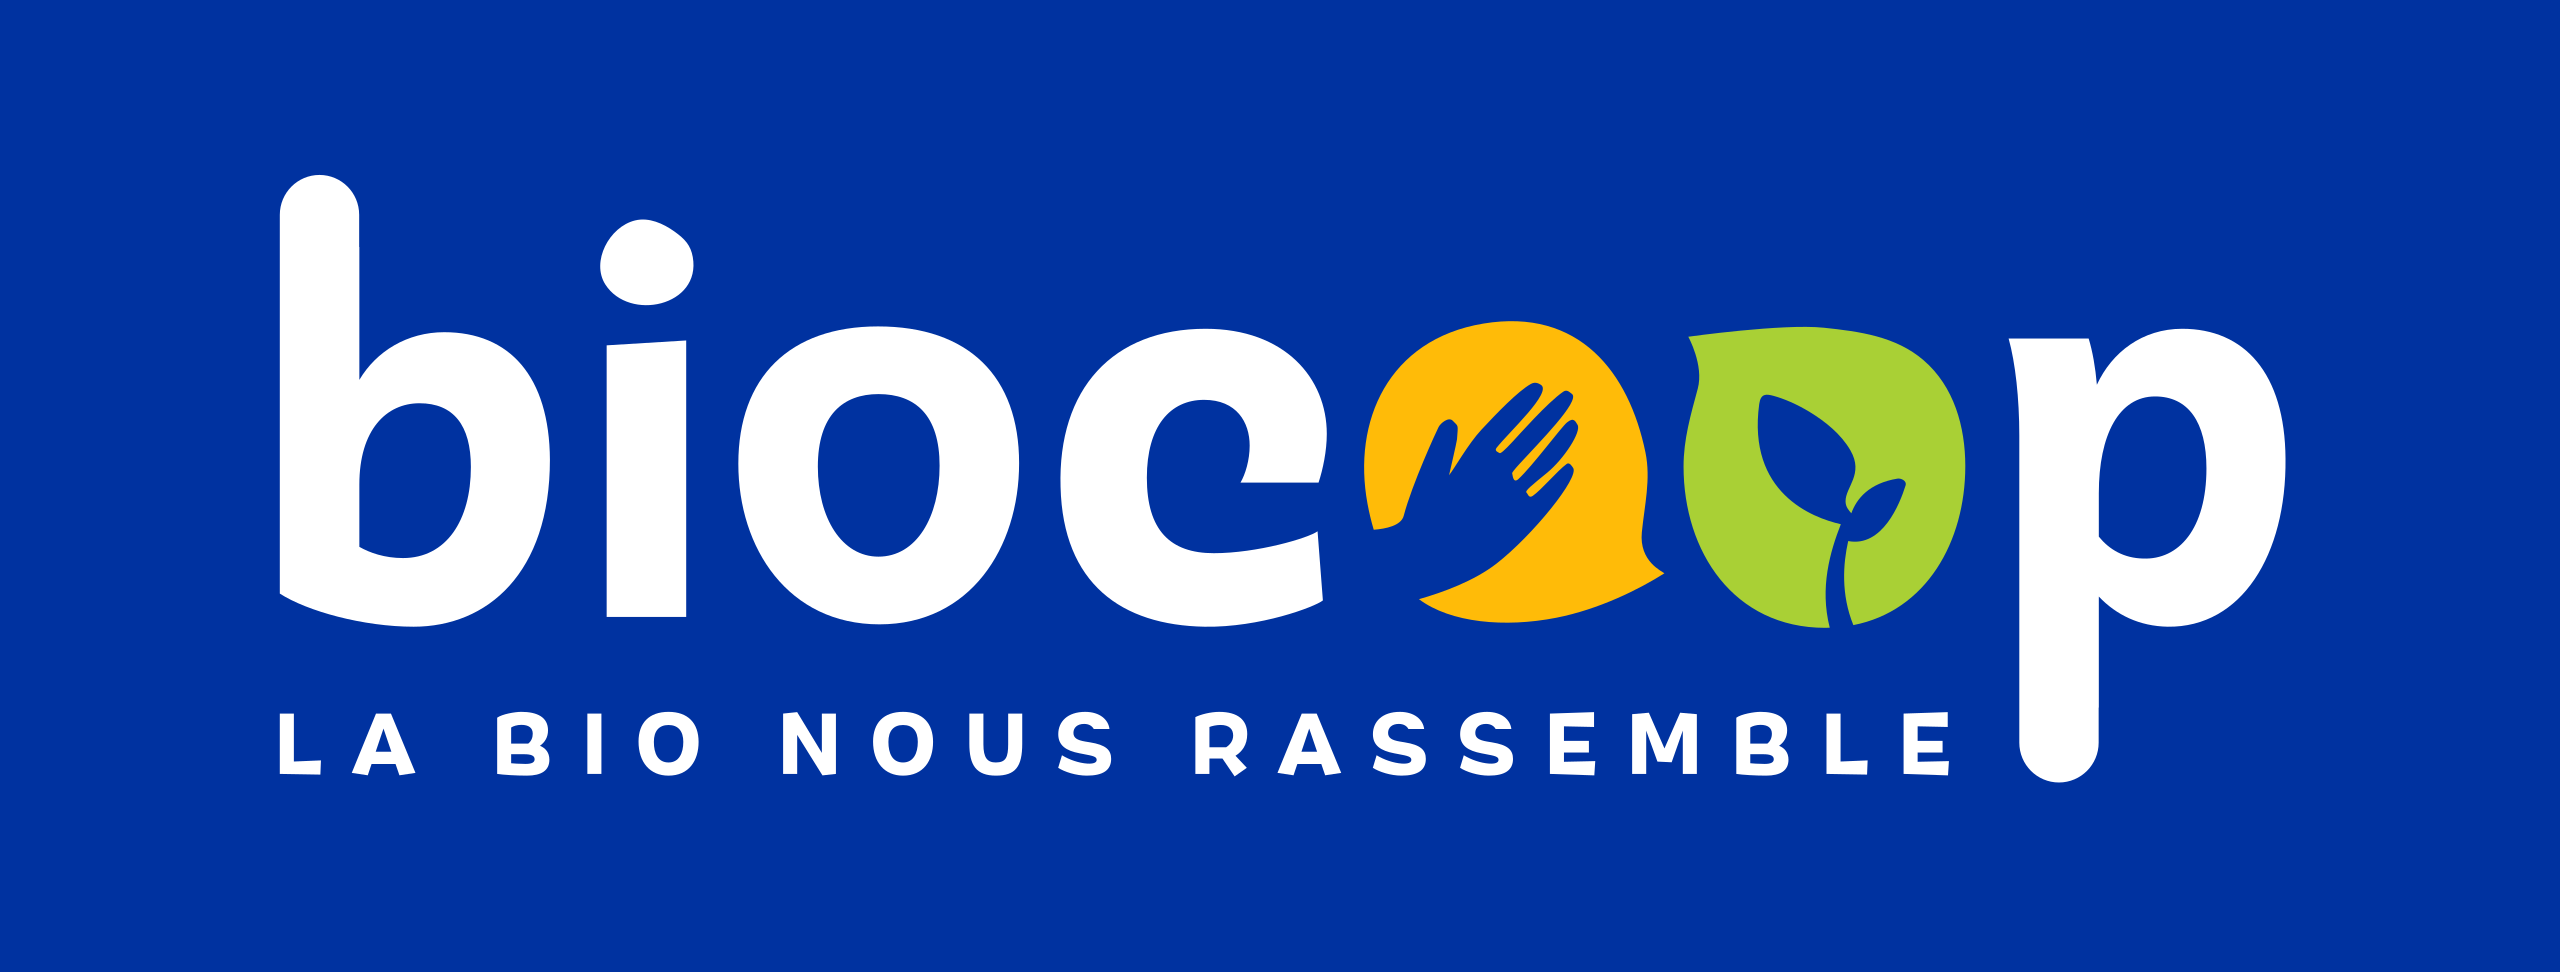 logo bioccop foodwatch